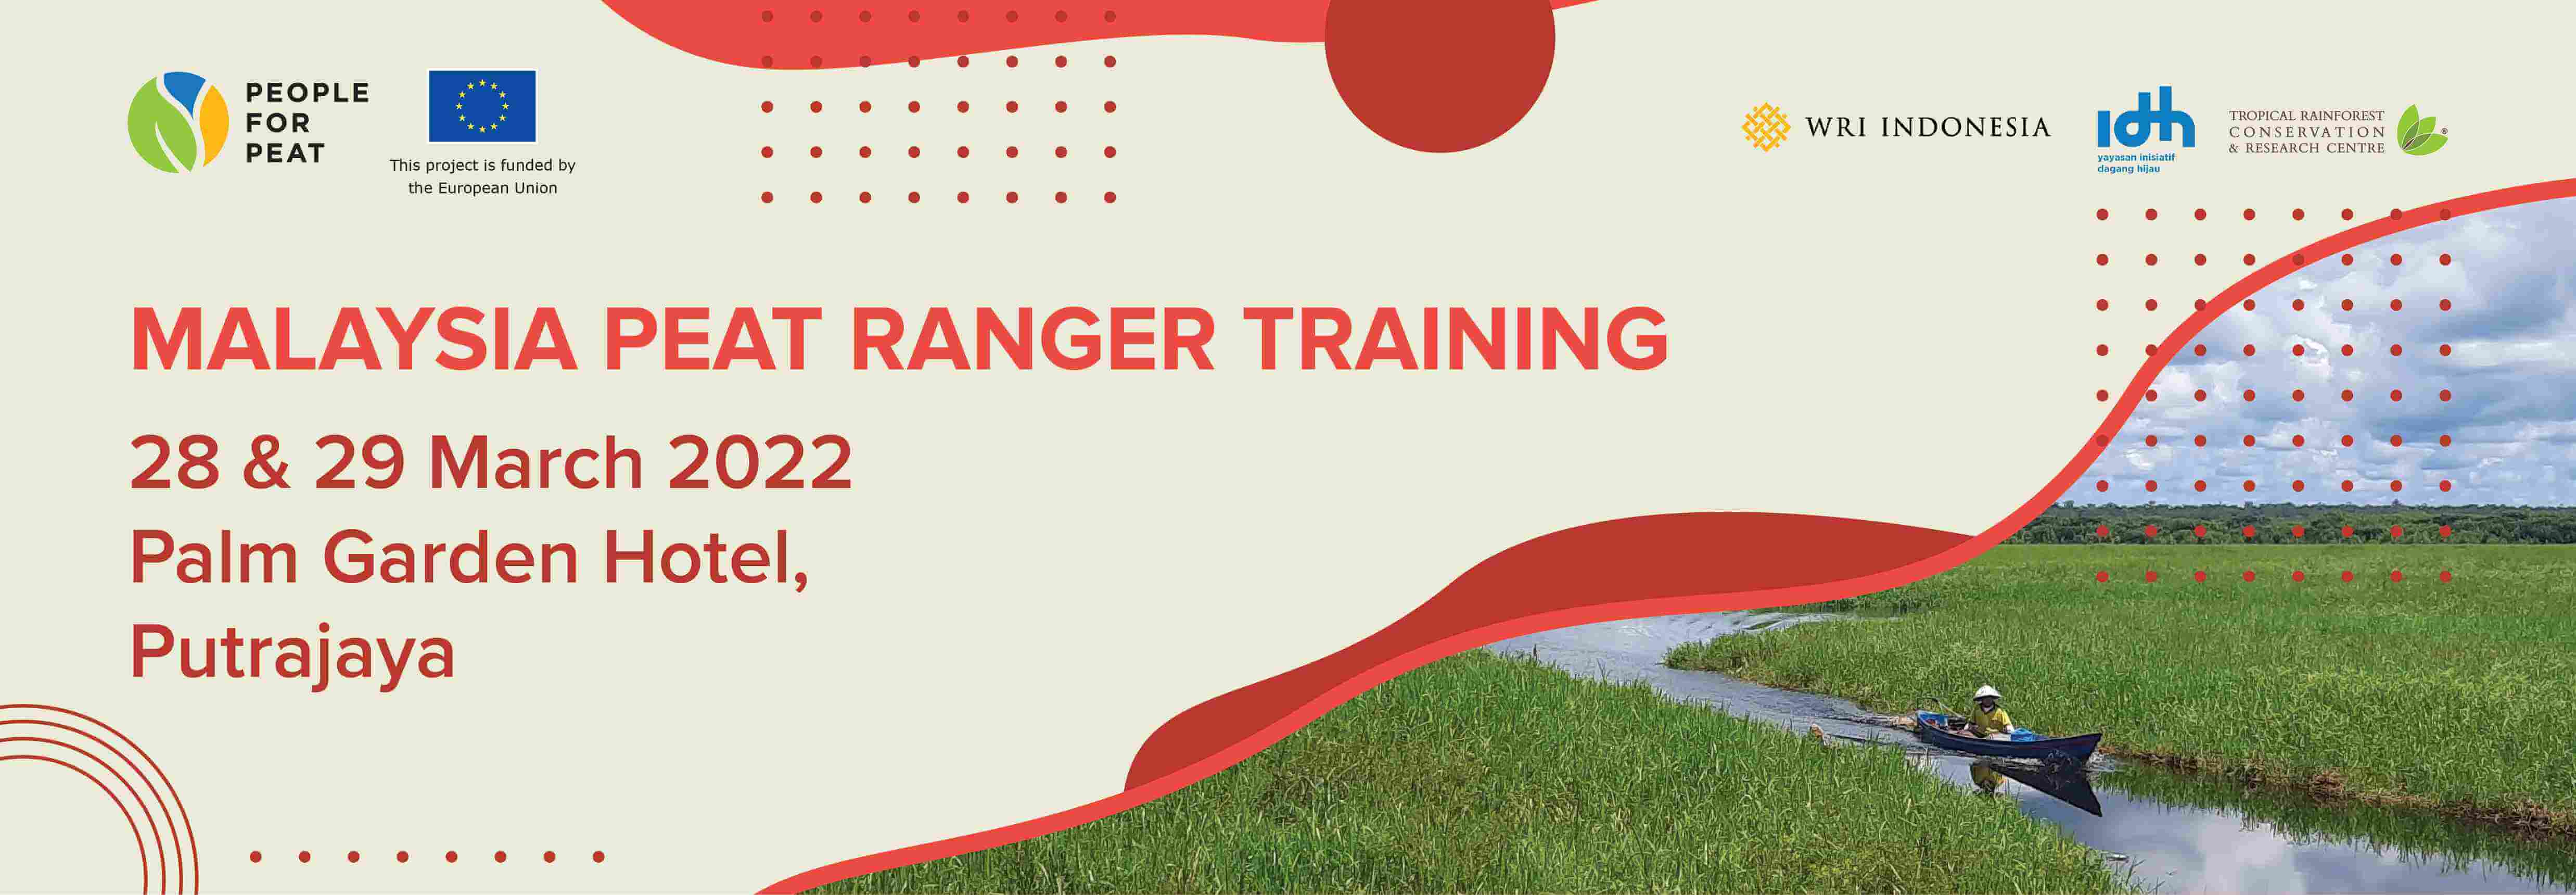 Malaysia Peat Ranger Training